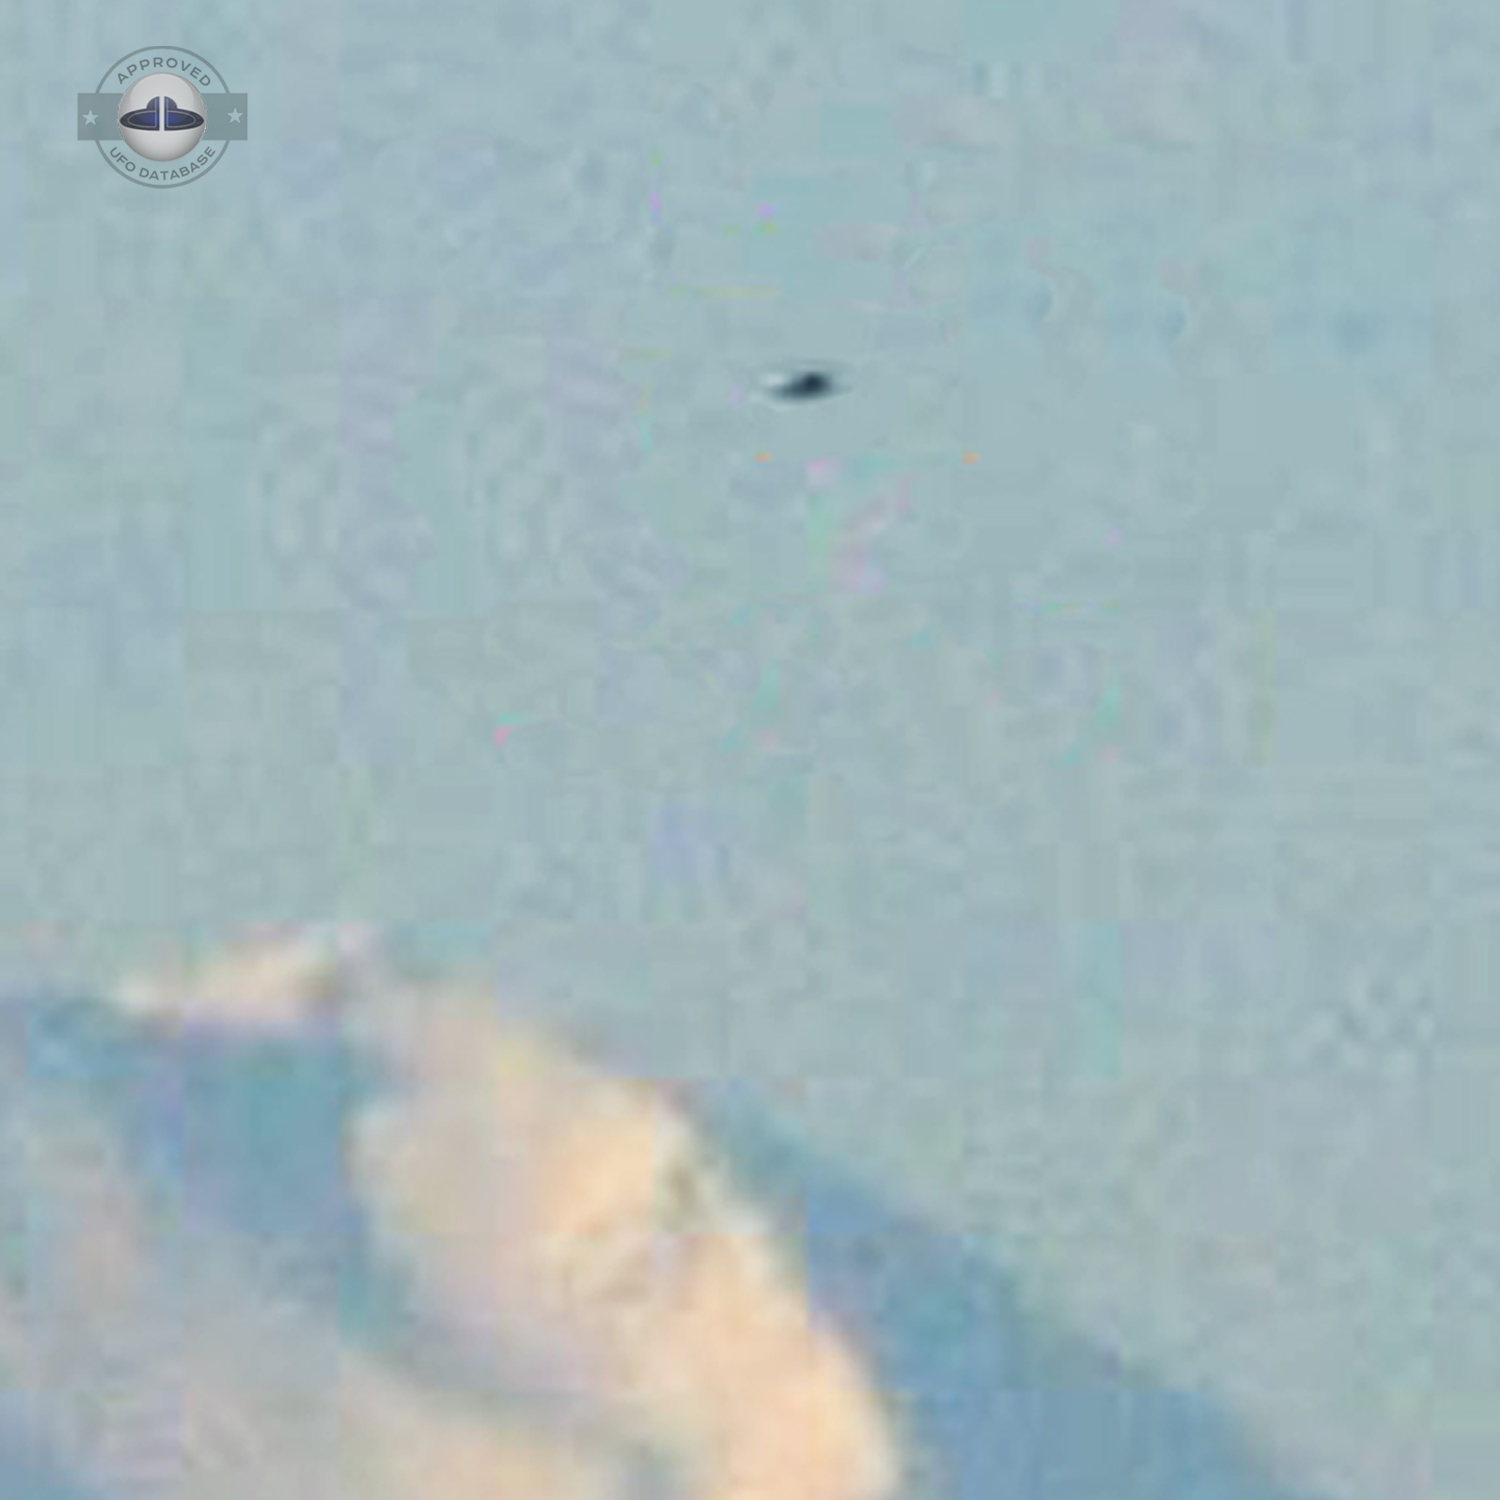 Fleet of UFOs over Mount Fuji worries Asia | Japan | February 2011 UFO Picture #220-3